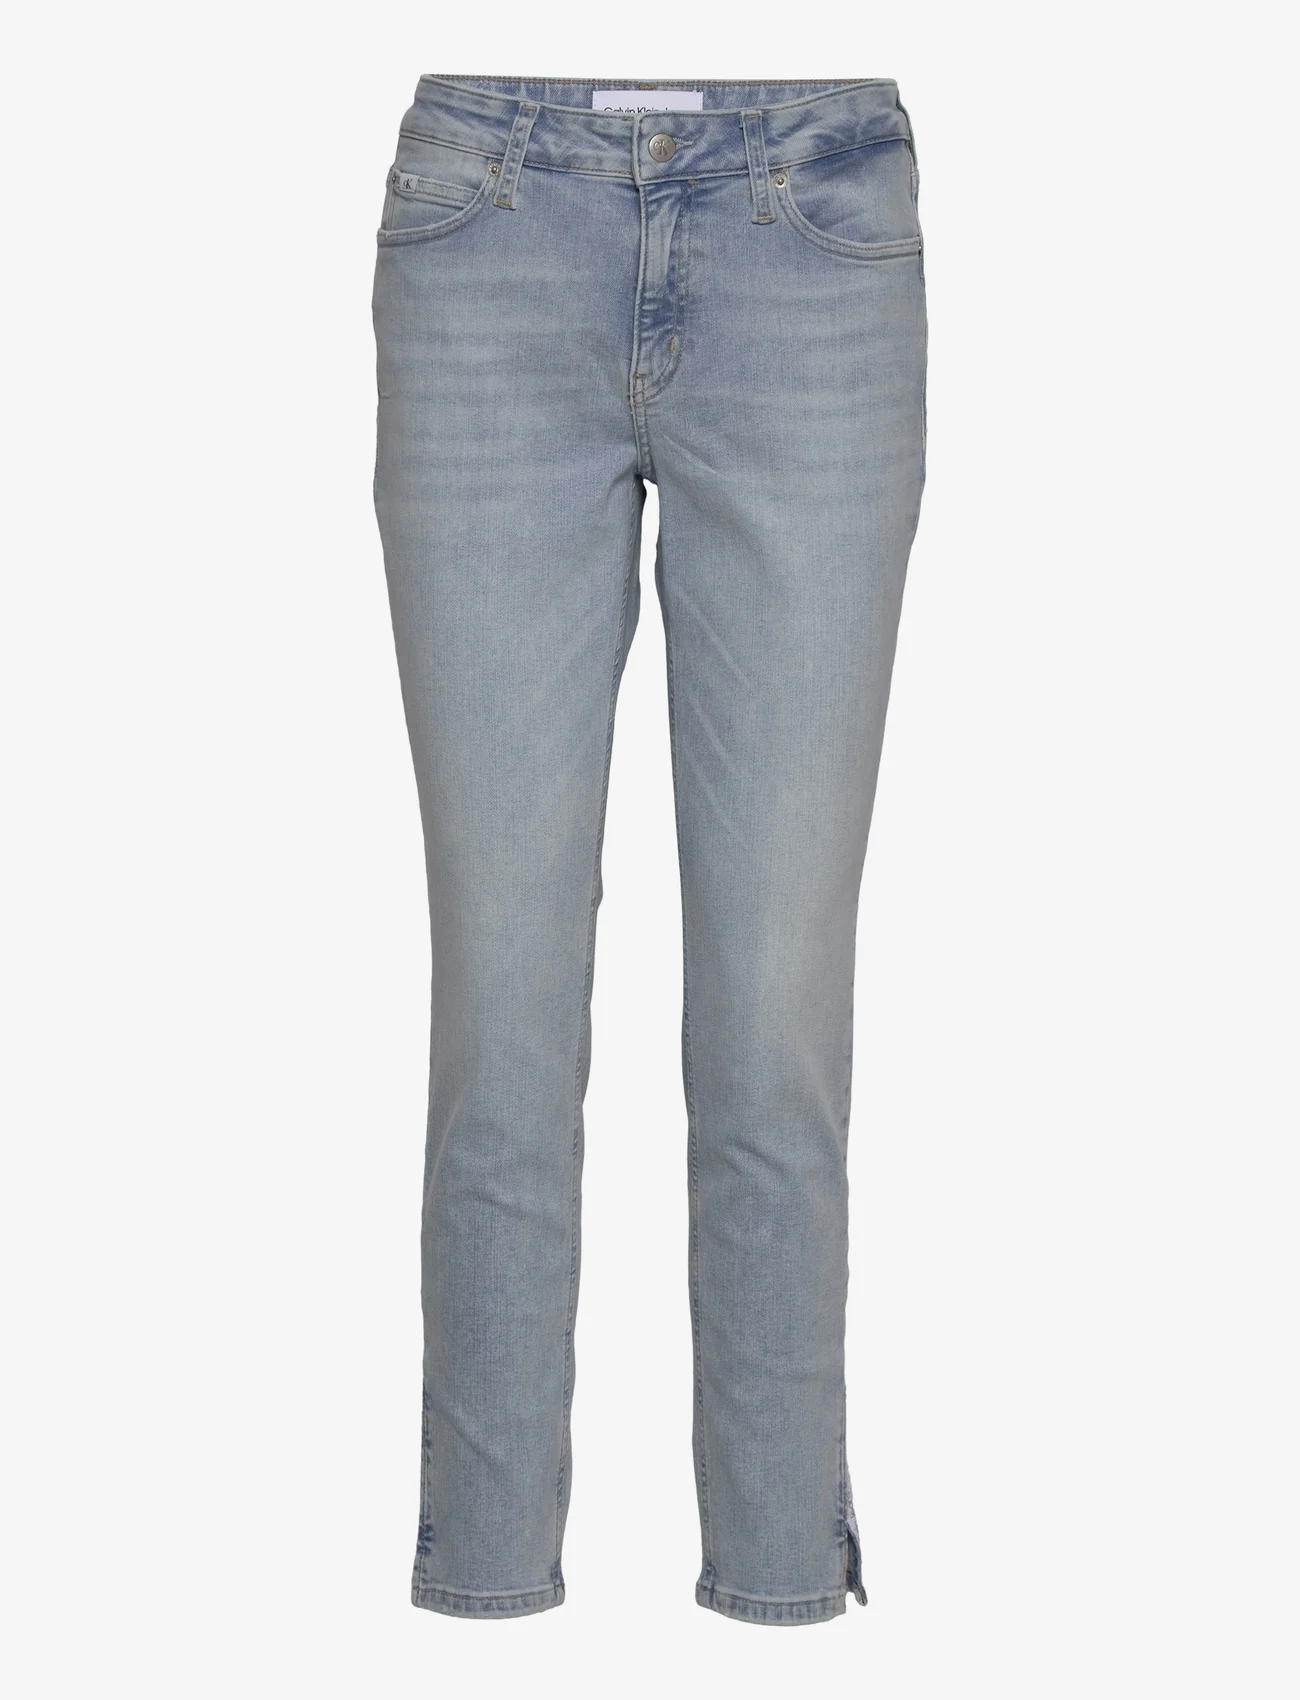 Calvin Klein Jeans - MID RISE SKINNY ANKLE - skinny jeans - denim light - 0